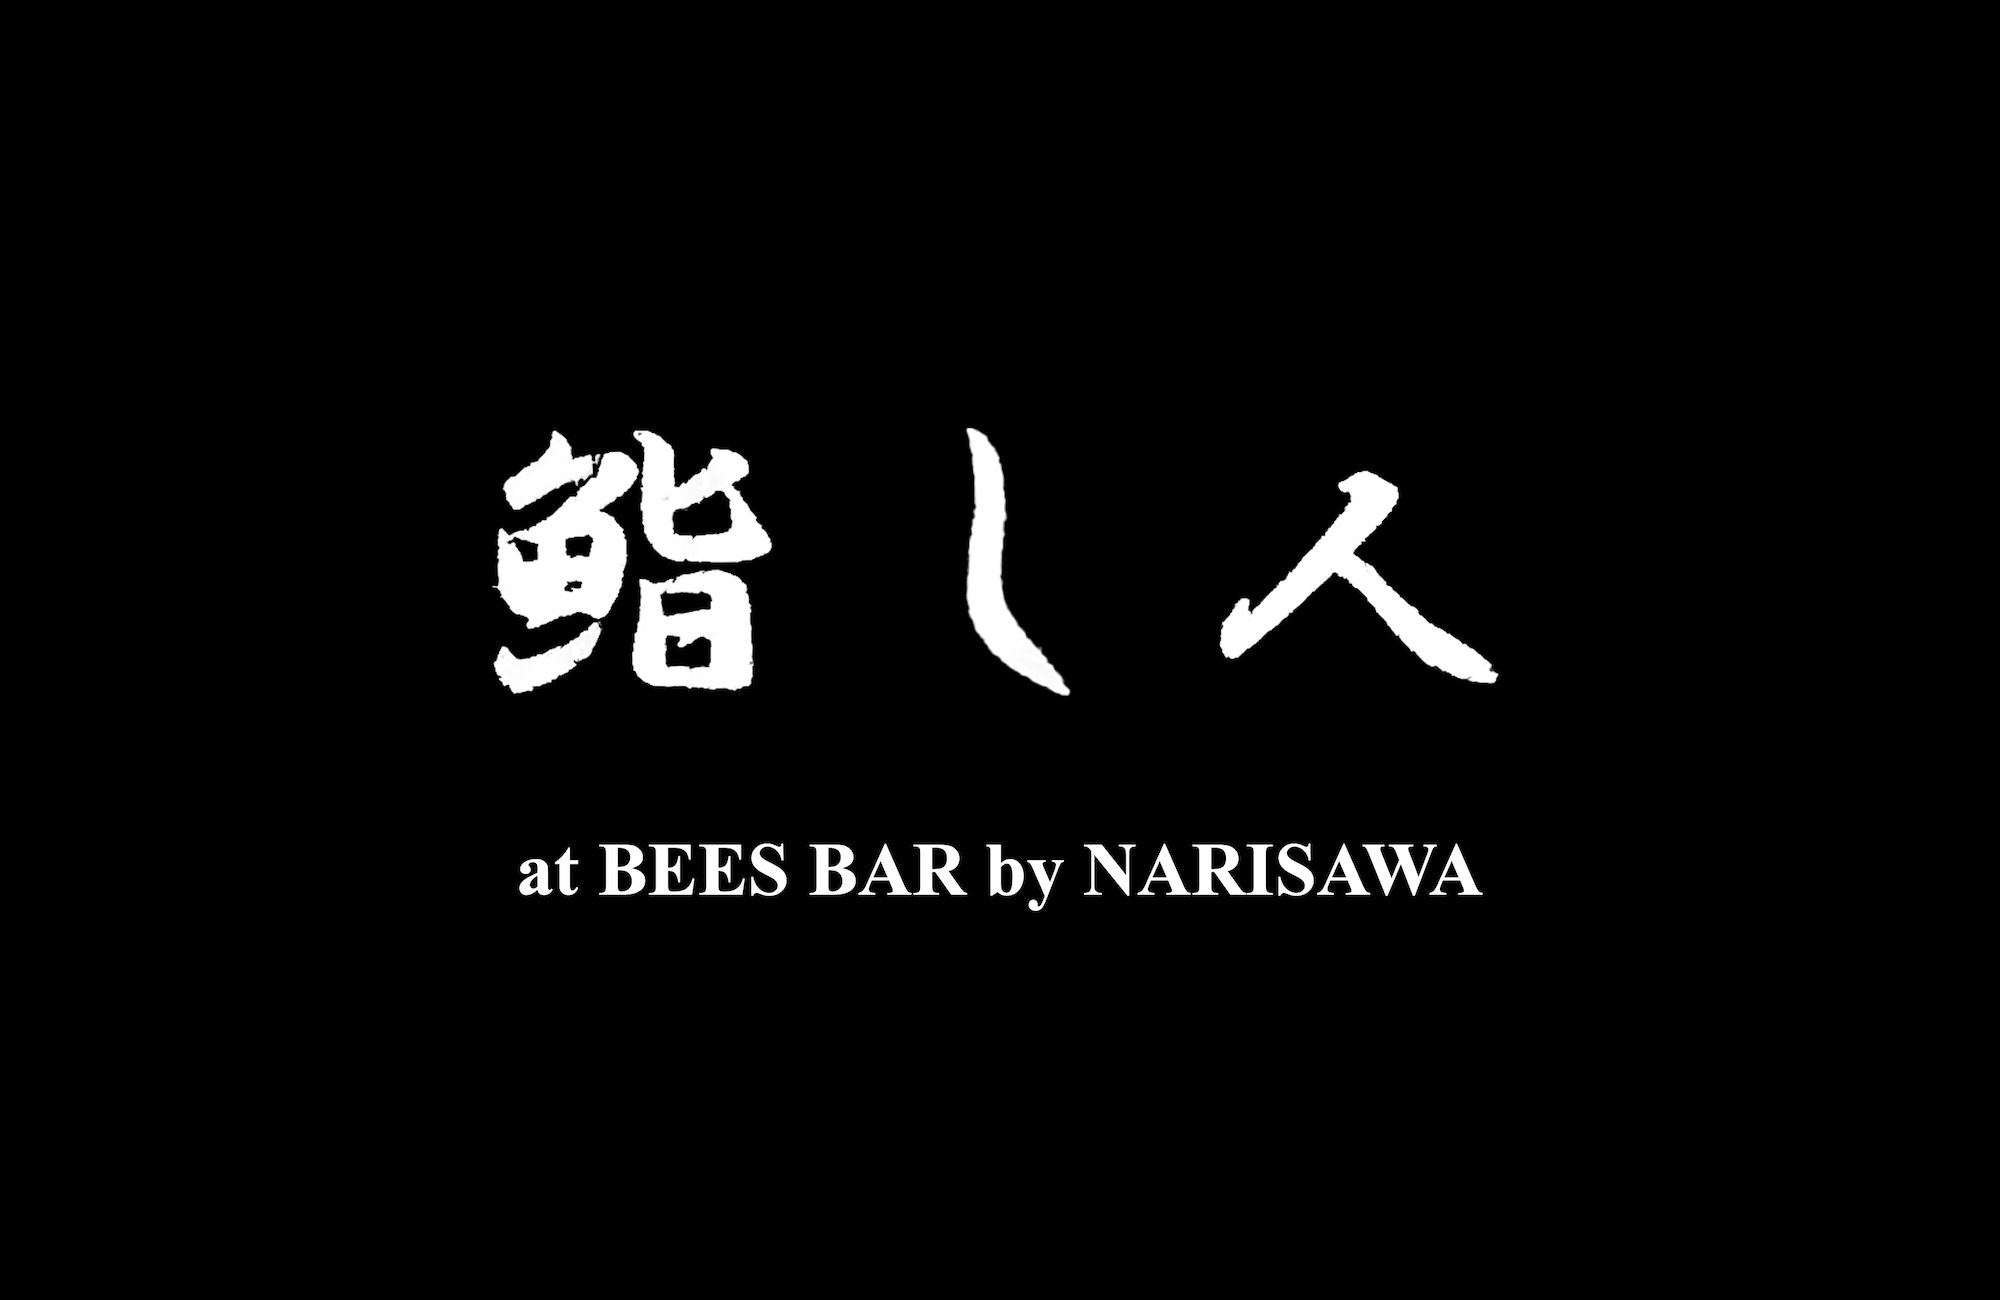 Sushijin at BEES BAR by NARISAWA (takeaway)'s images1